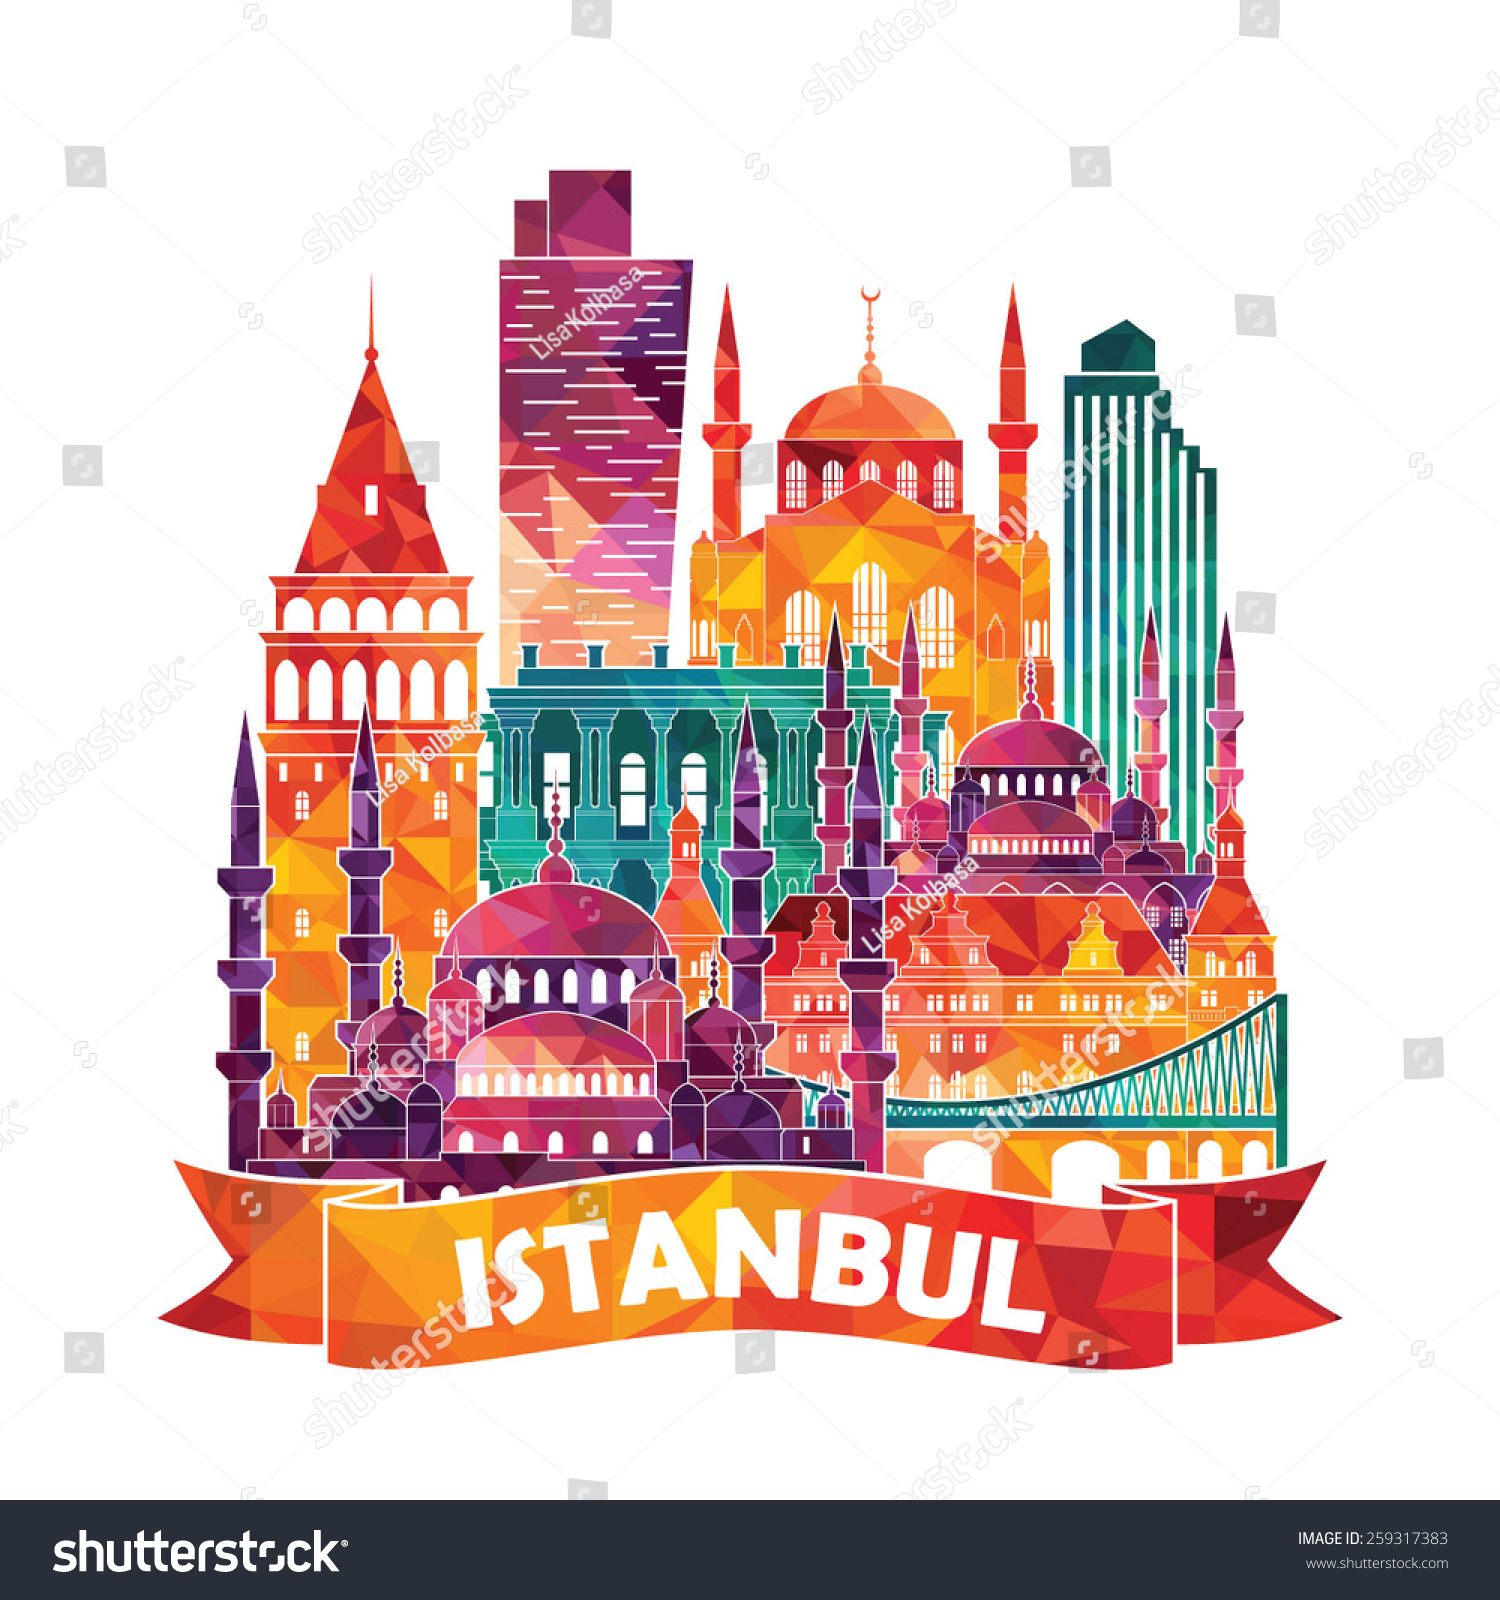 Istanbul Detailed Silhouette Vector Illustration Stock Vector 259317383 - Shutterstock